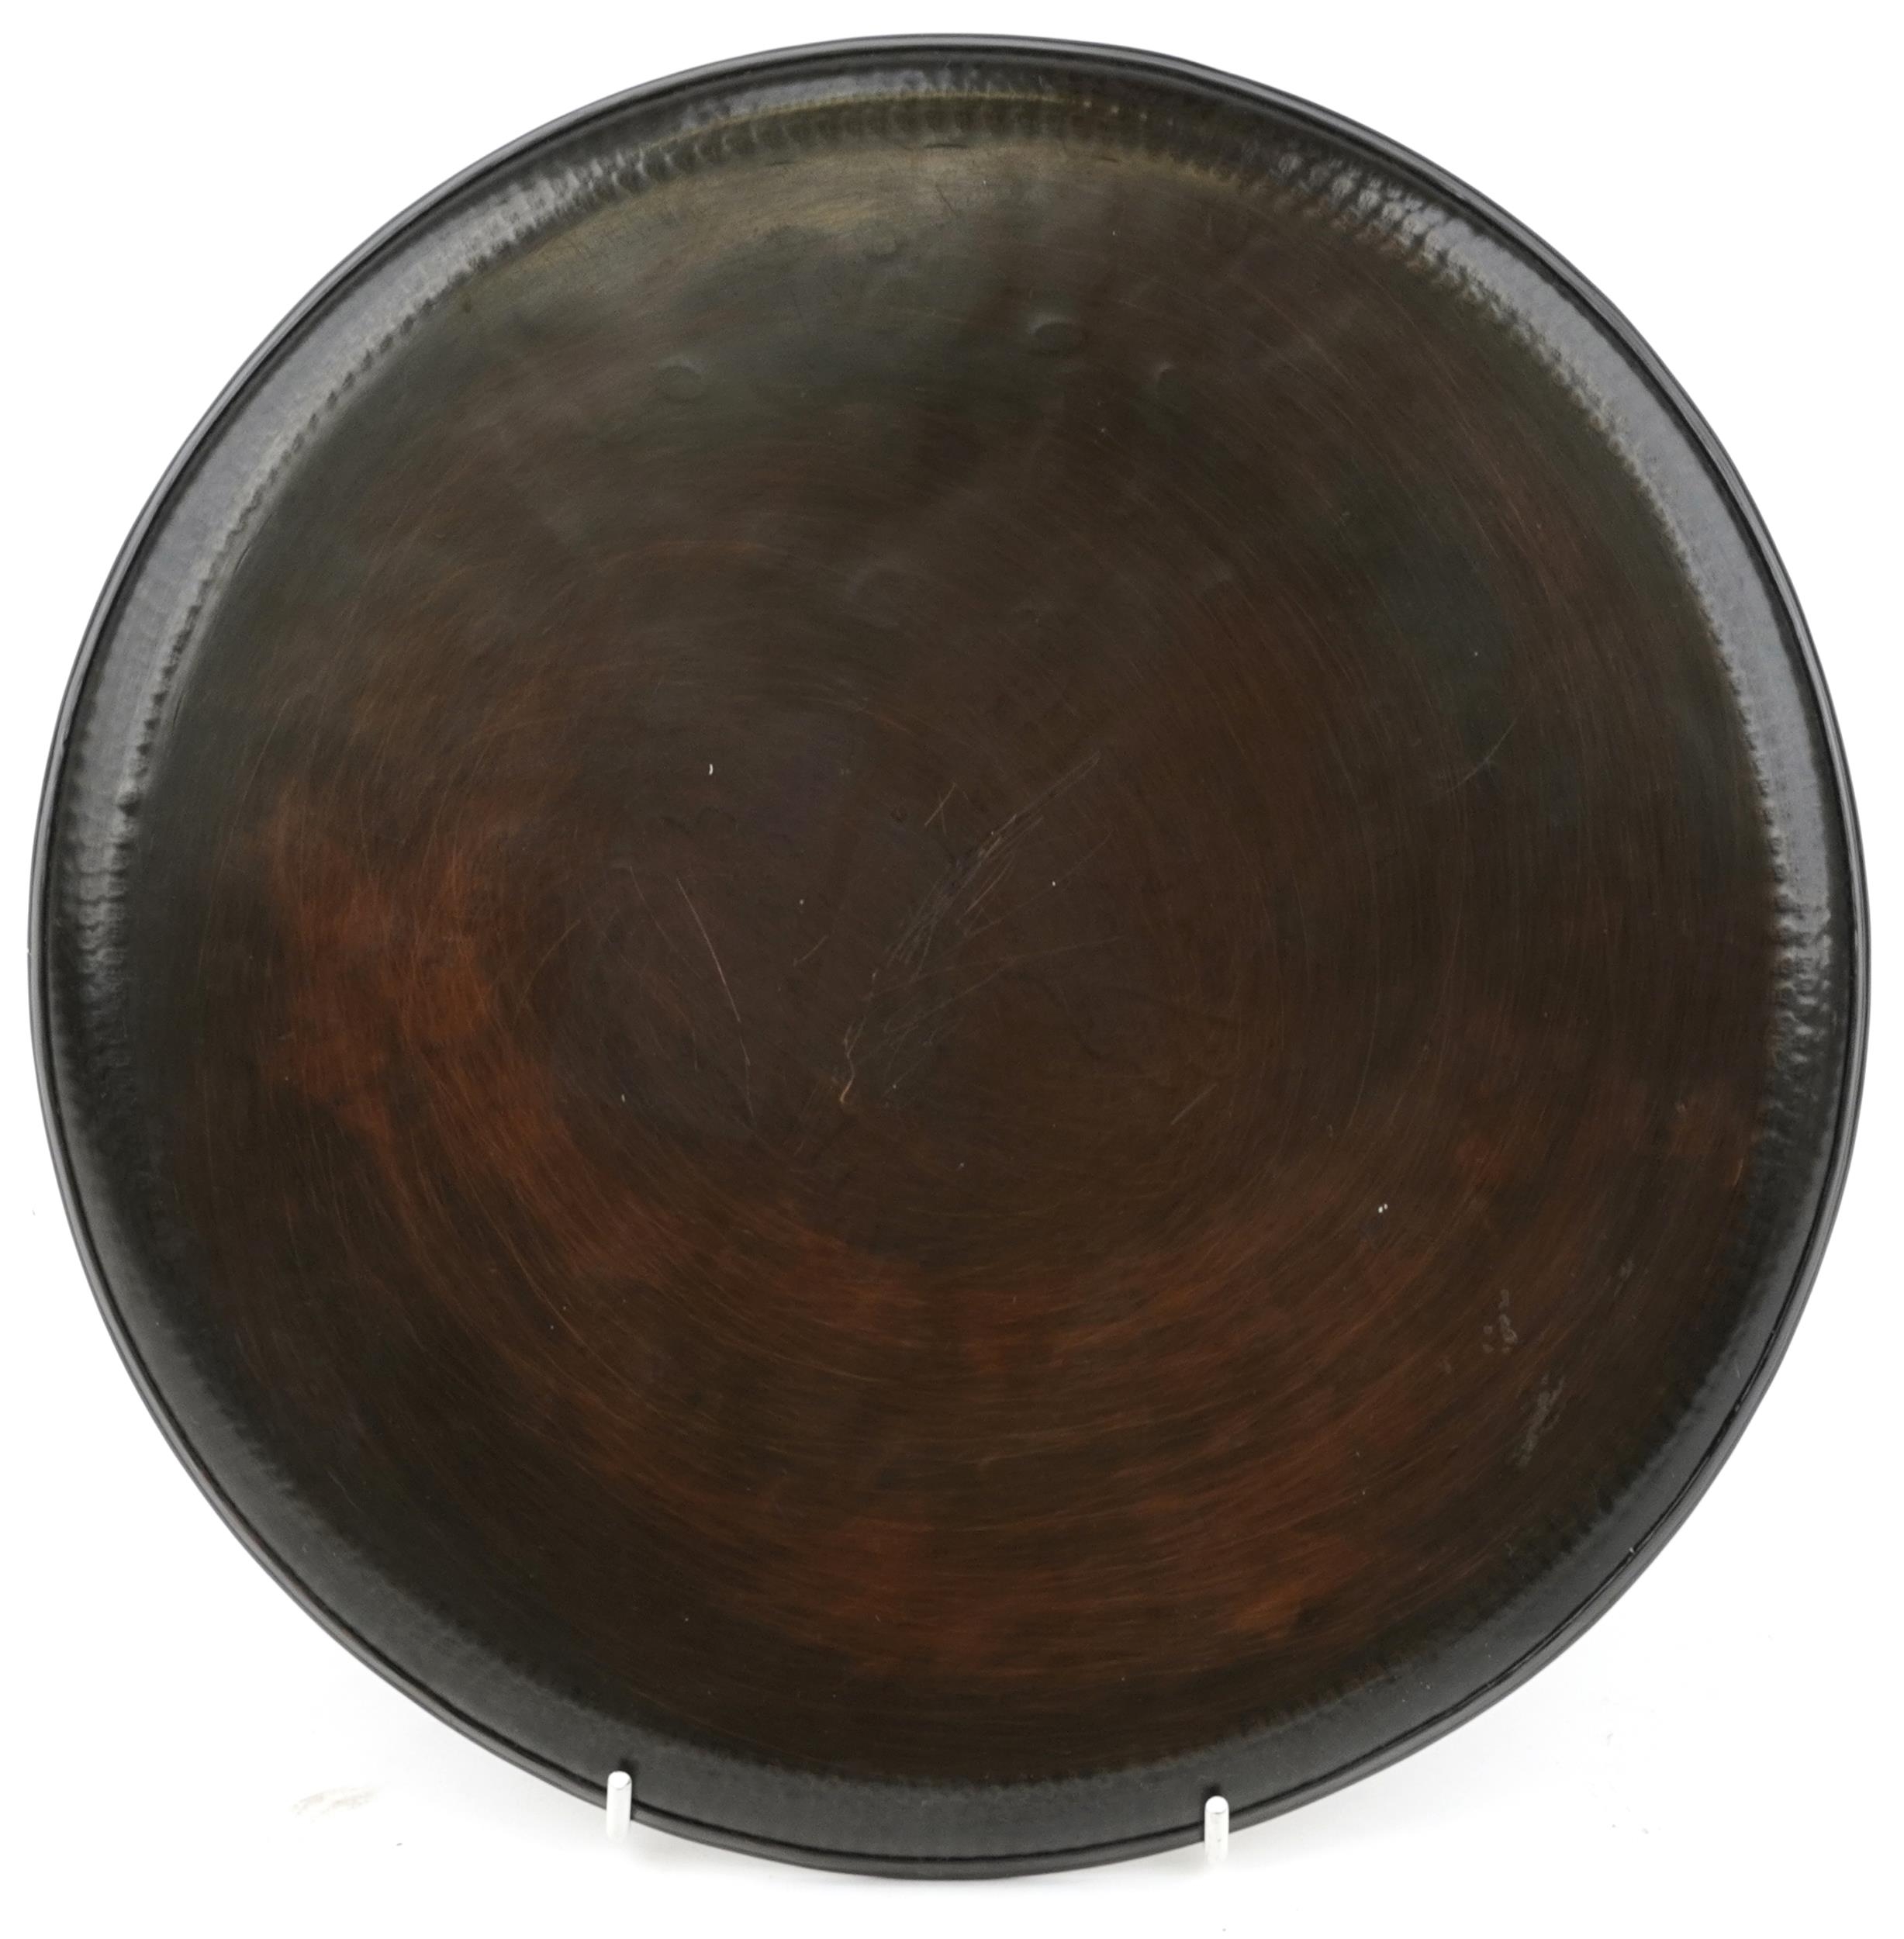 Hugh Wallis, Arts and Crafts copper, pewter inlaid acorn design tray, 27cm in diameter - Image 2 of 3